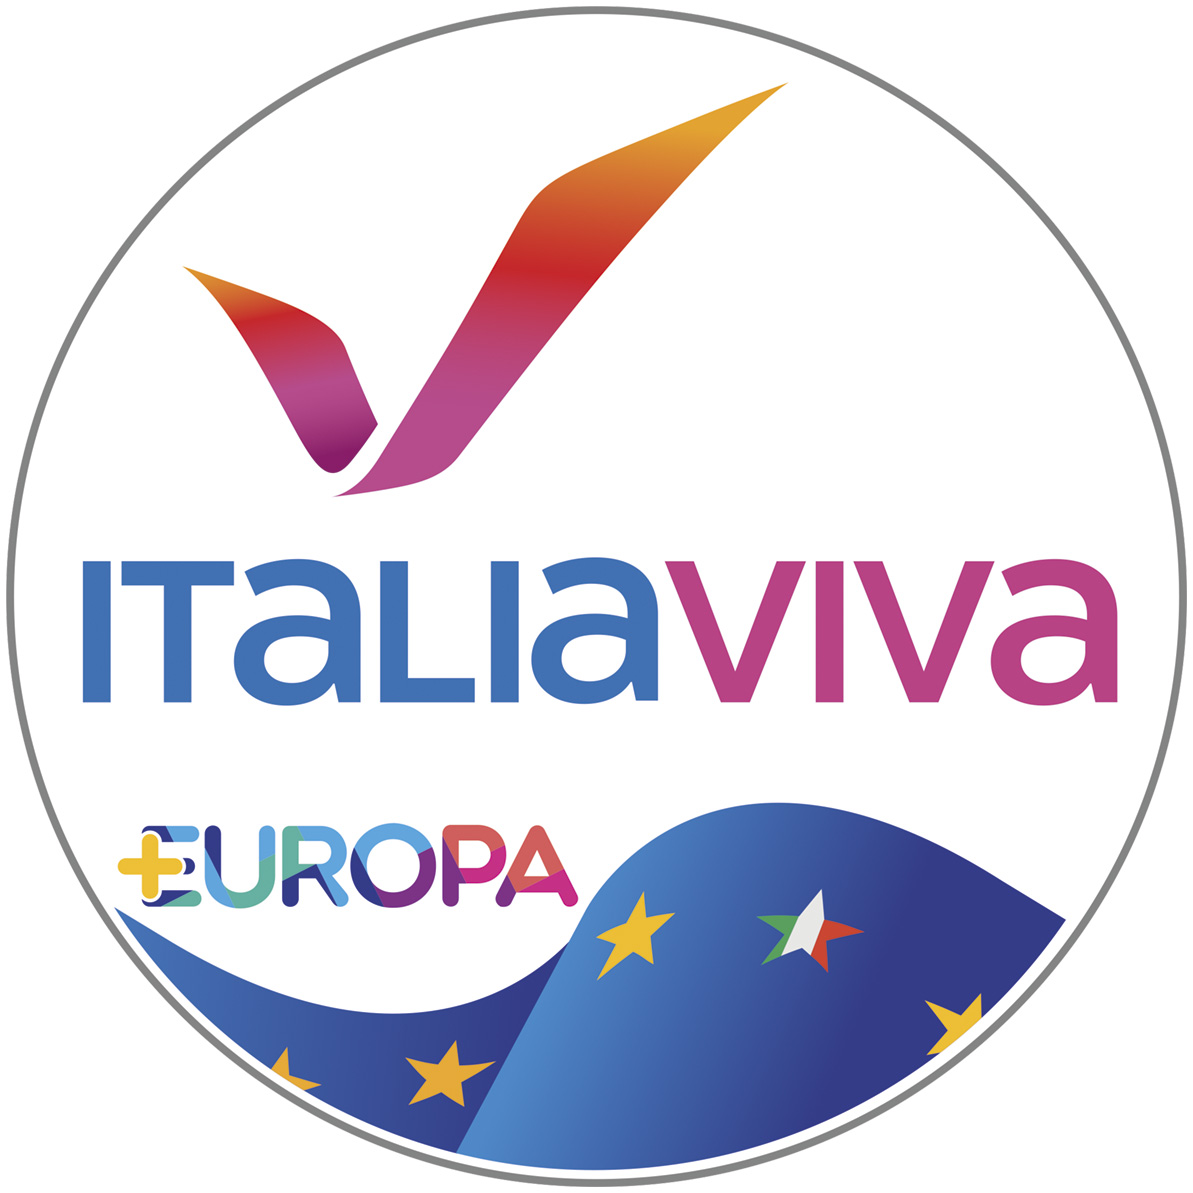 Italia Viva + Europa